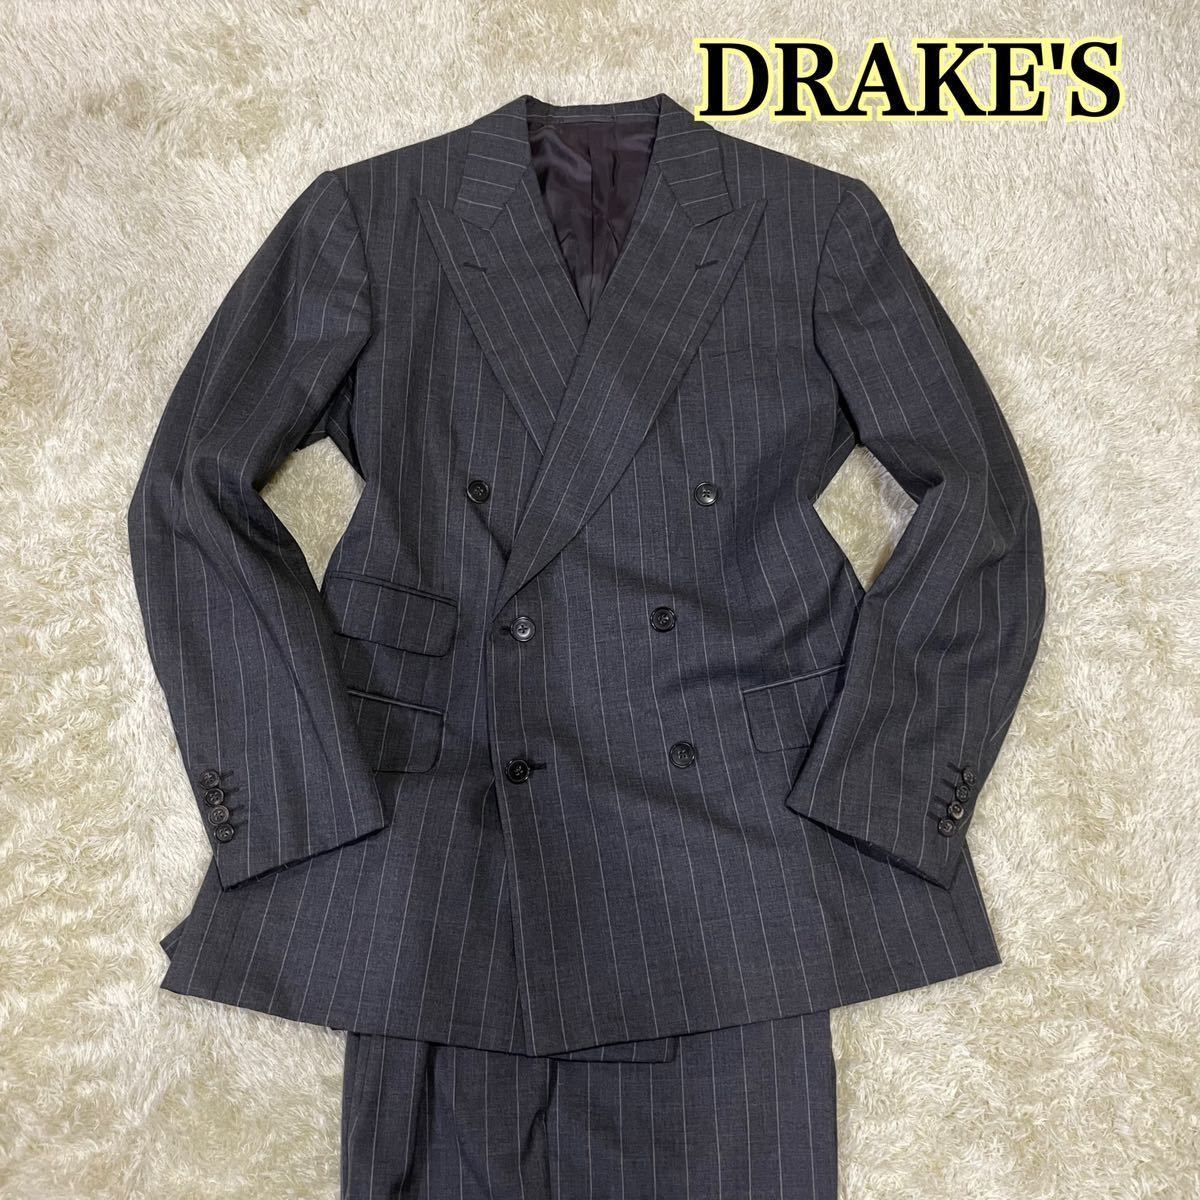 DRAKE'S 【超高級英国ブランド】 ドレイクス セットアップスーツ ダブルブレスト 48 チャコールグレー ウール ストライプ イタリア製_画像1